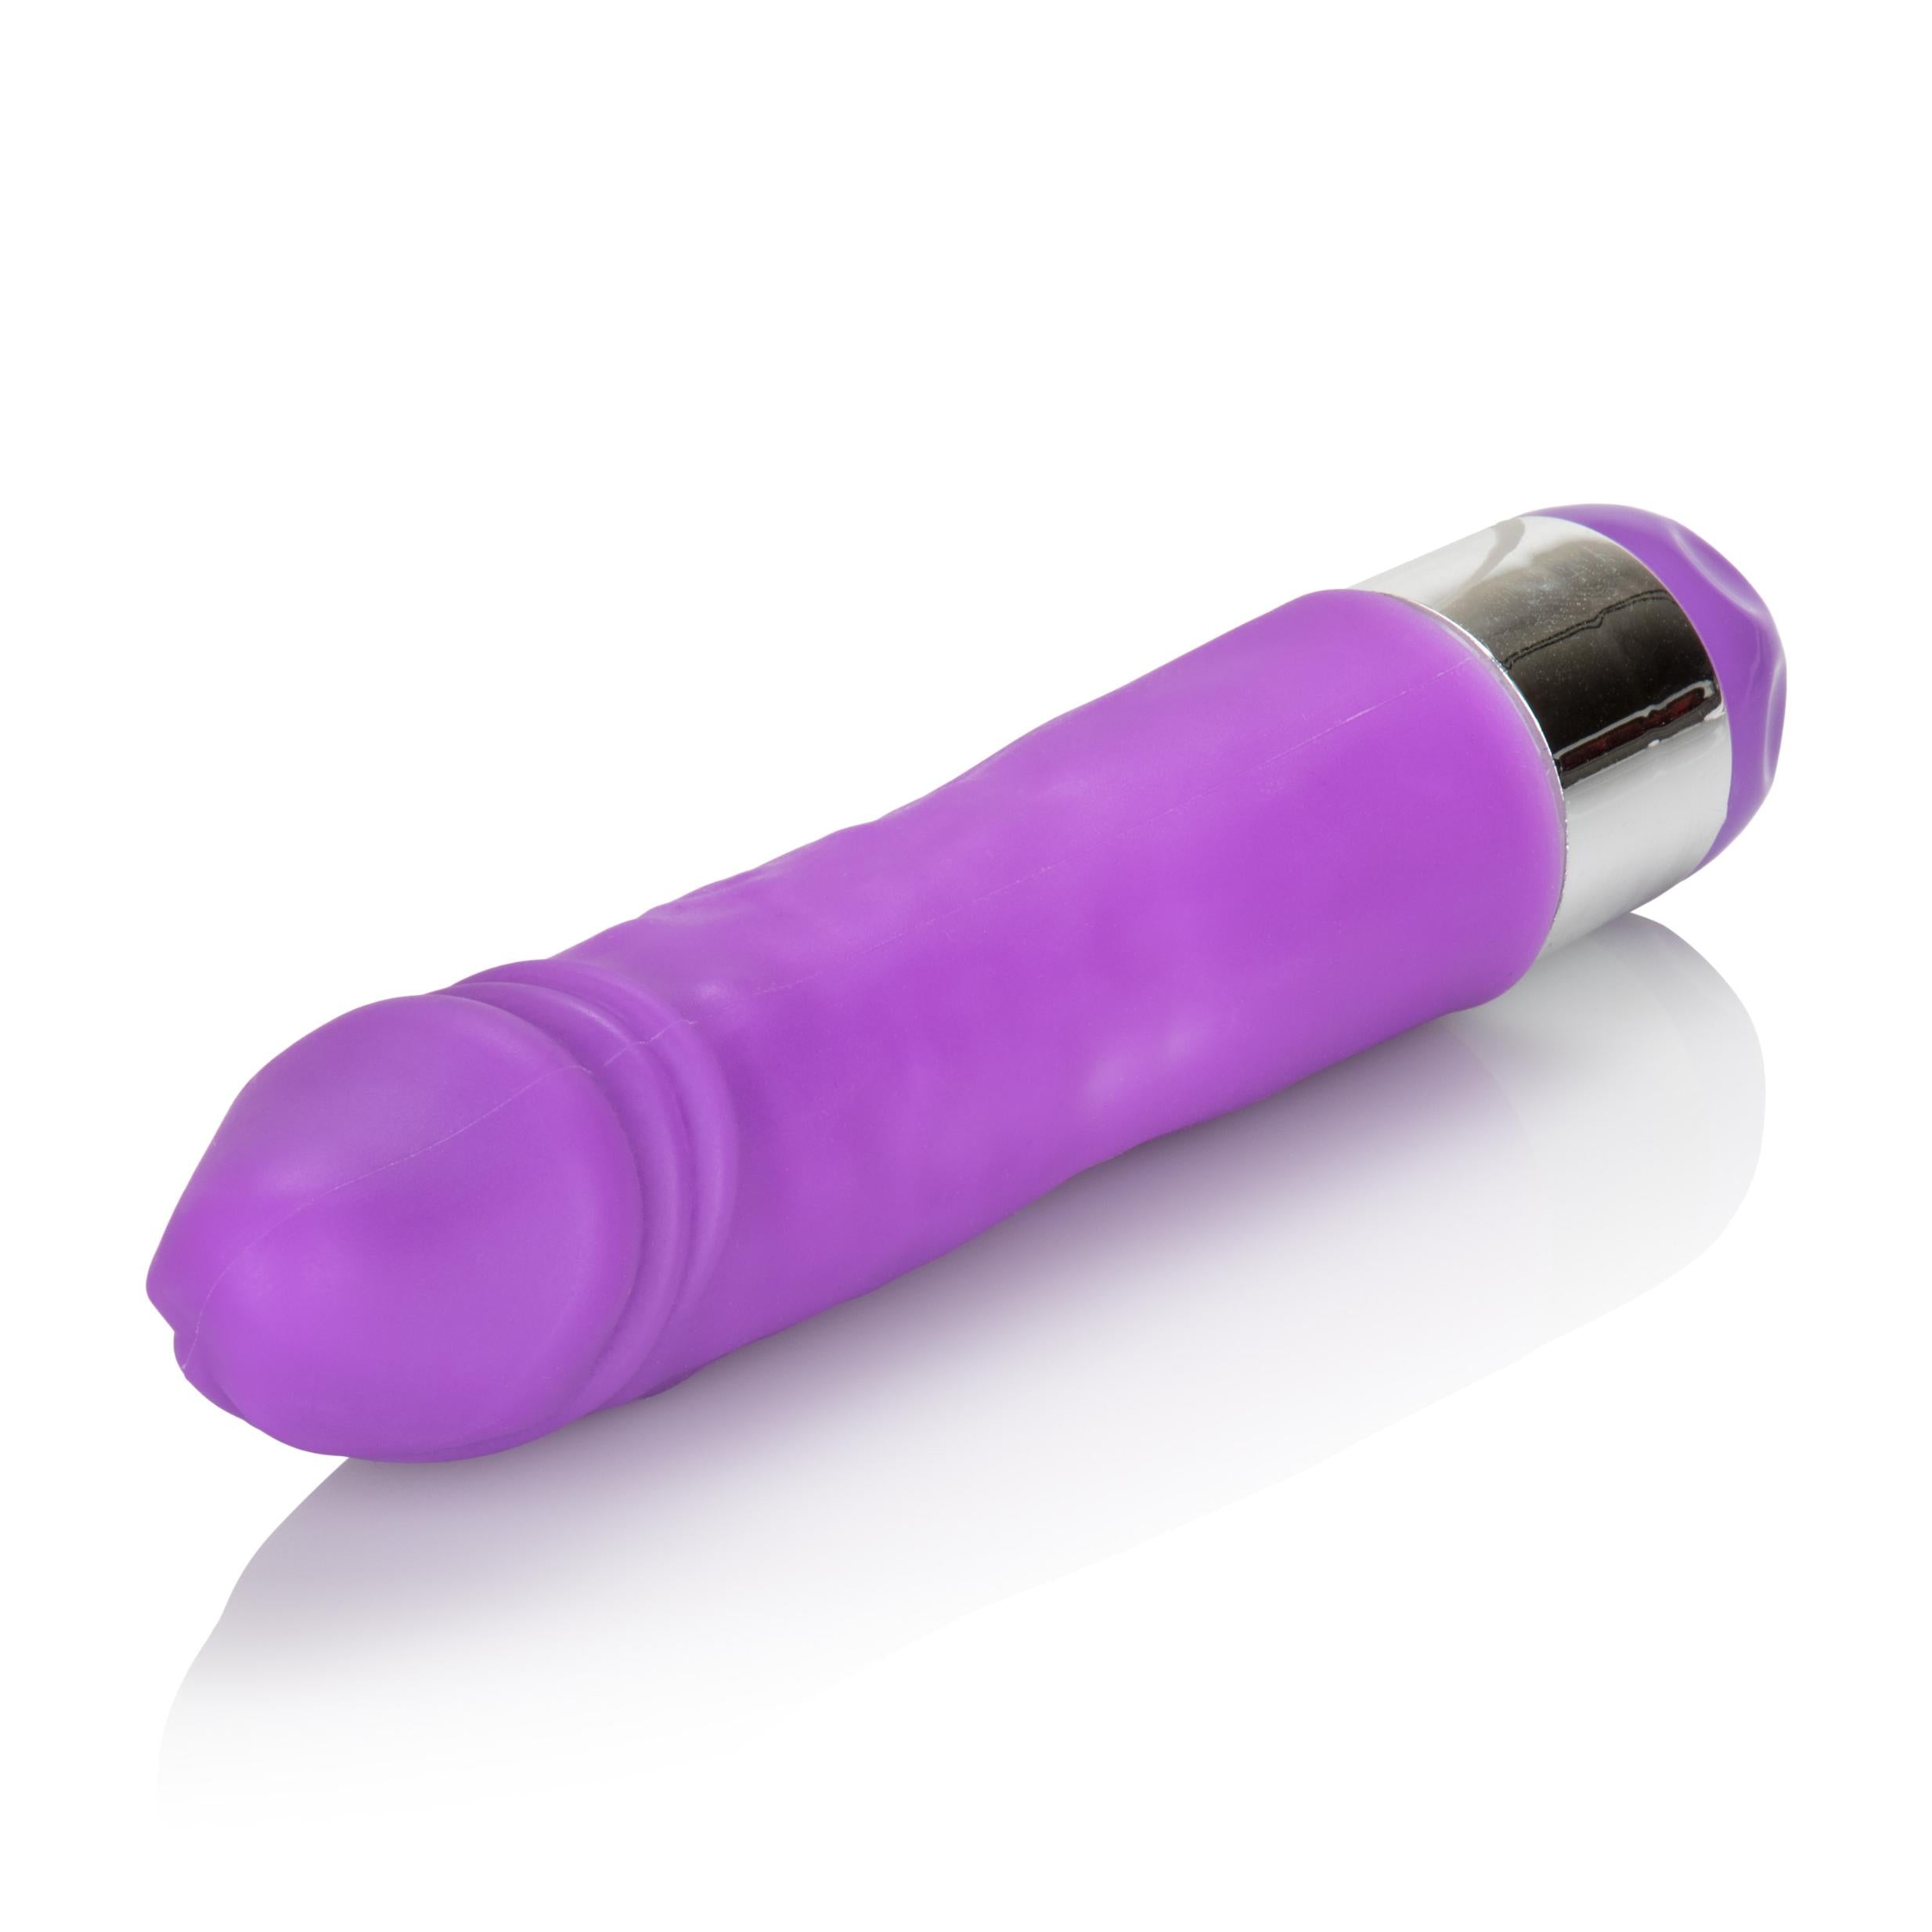 Shanes World Silicone Buddy Purple Vibrator